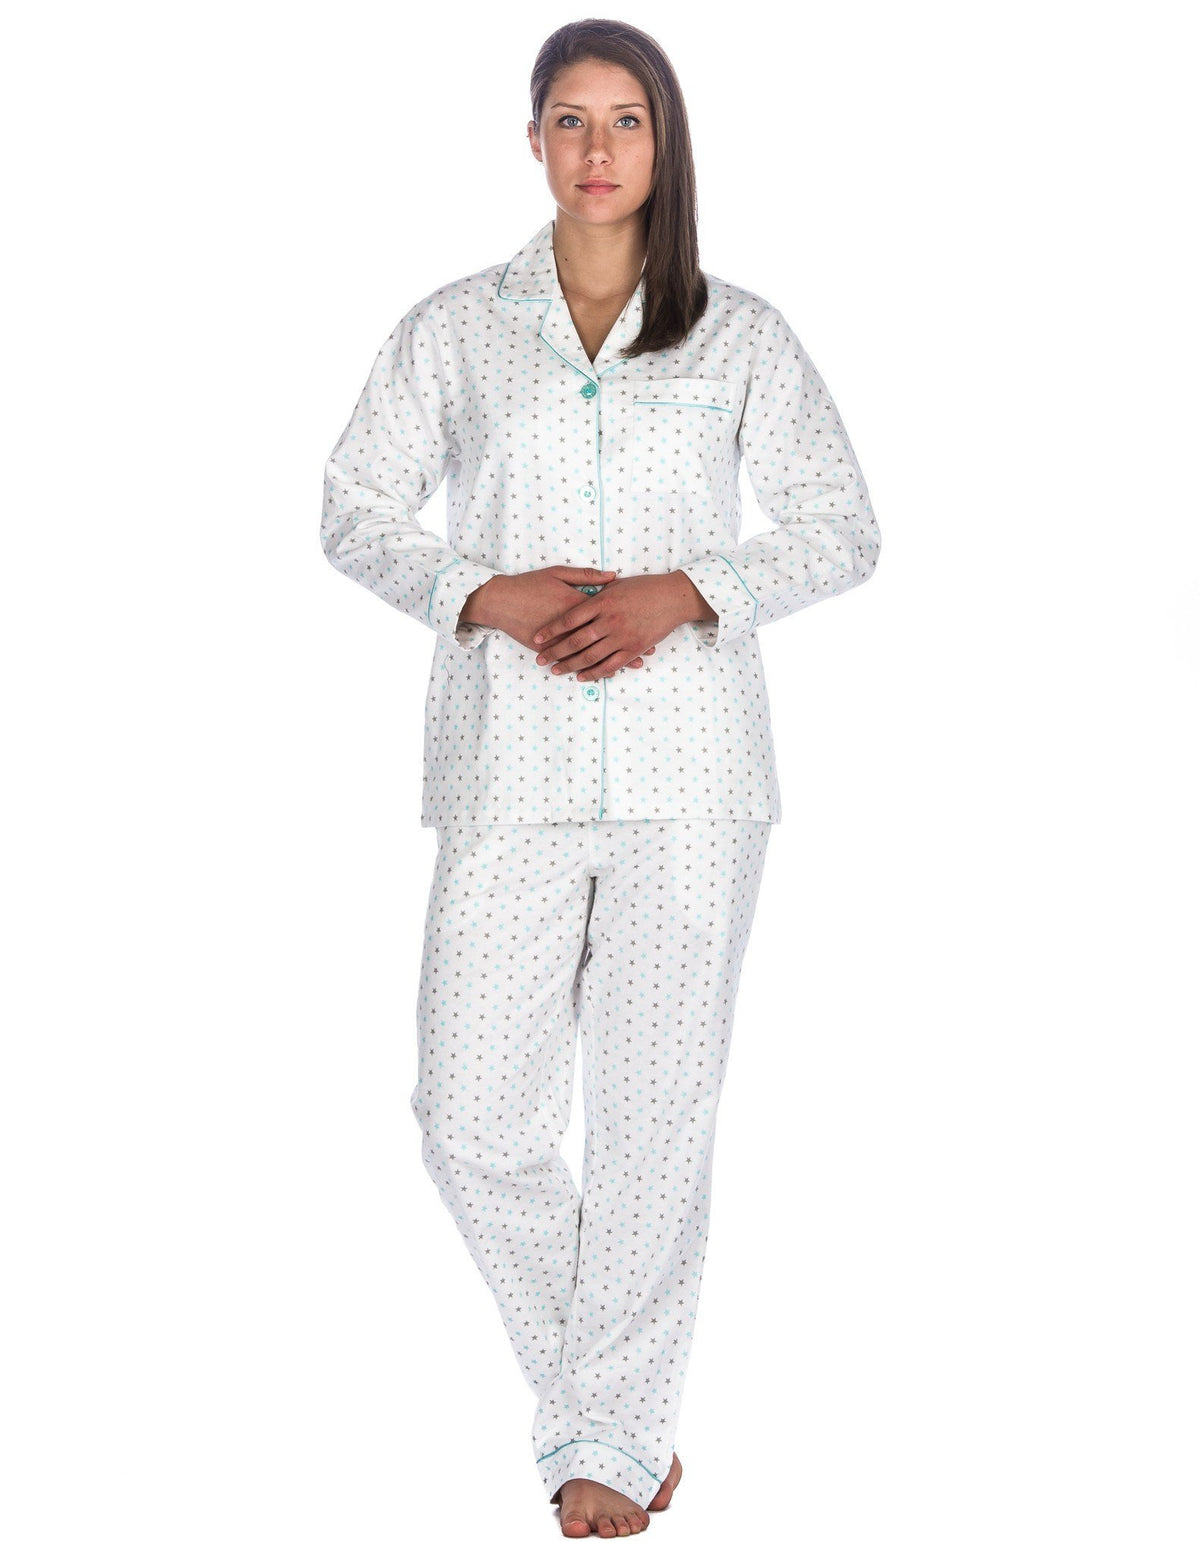 Realxed Fit Womens 100% Cotton Flannel Pajama Sleepwear Set - Stars White